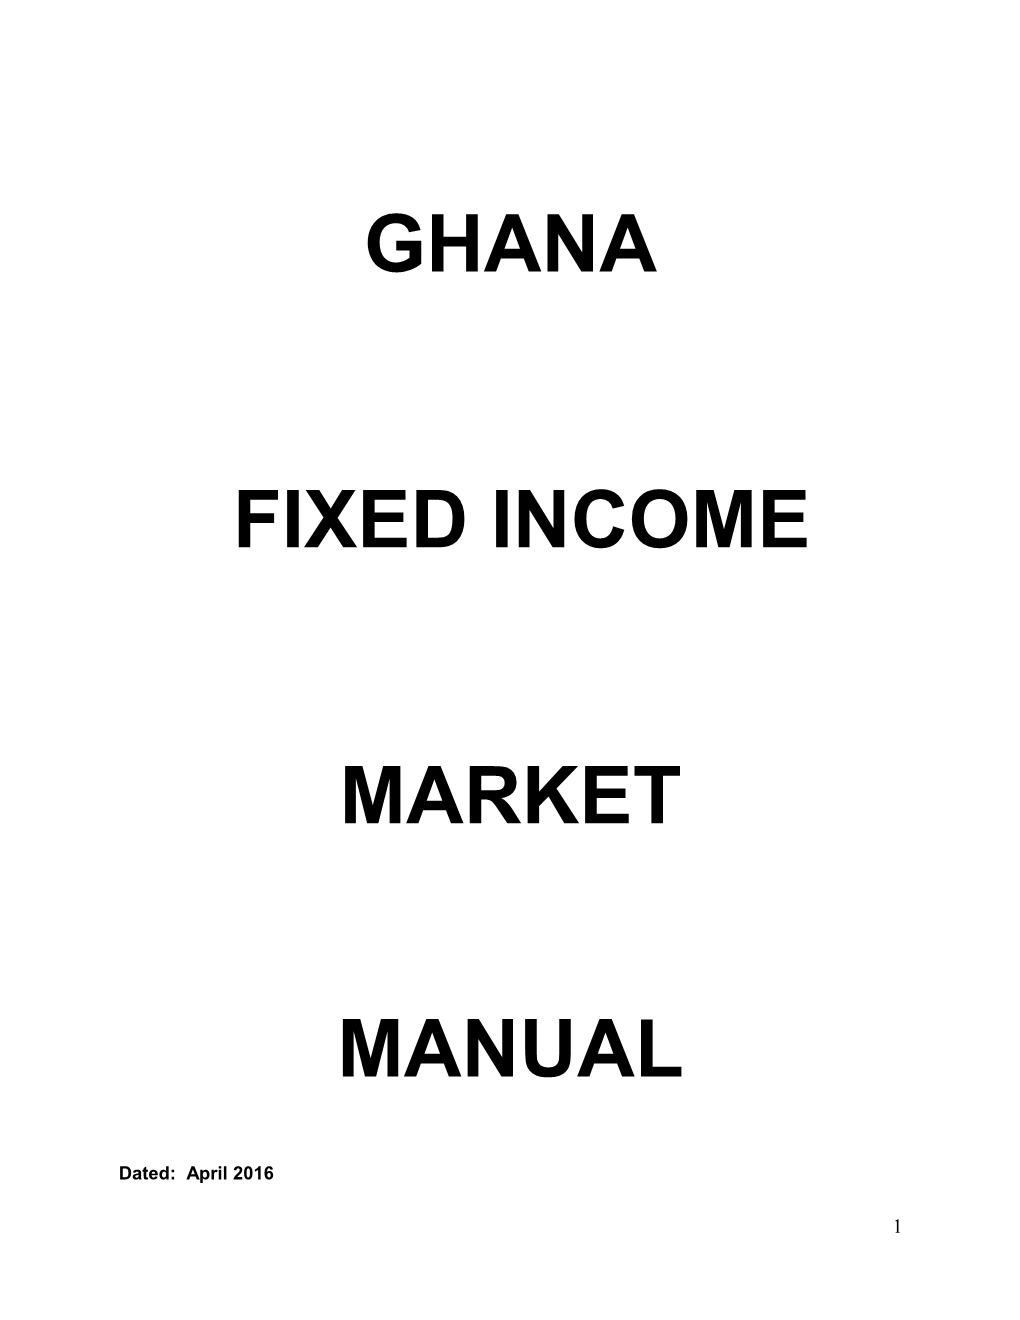 Ghana Fixed Income Market Manual